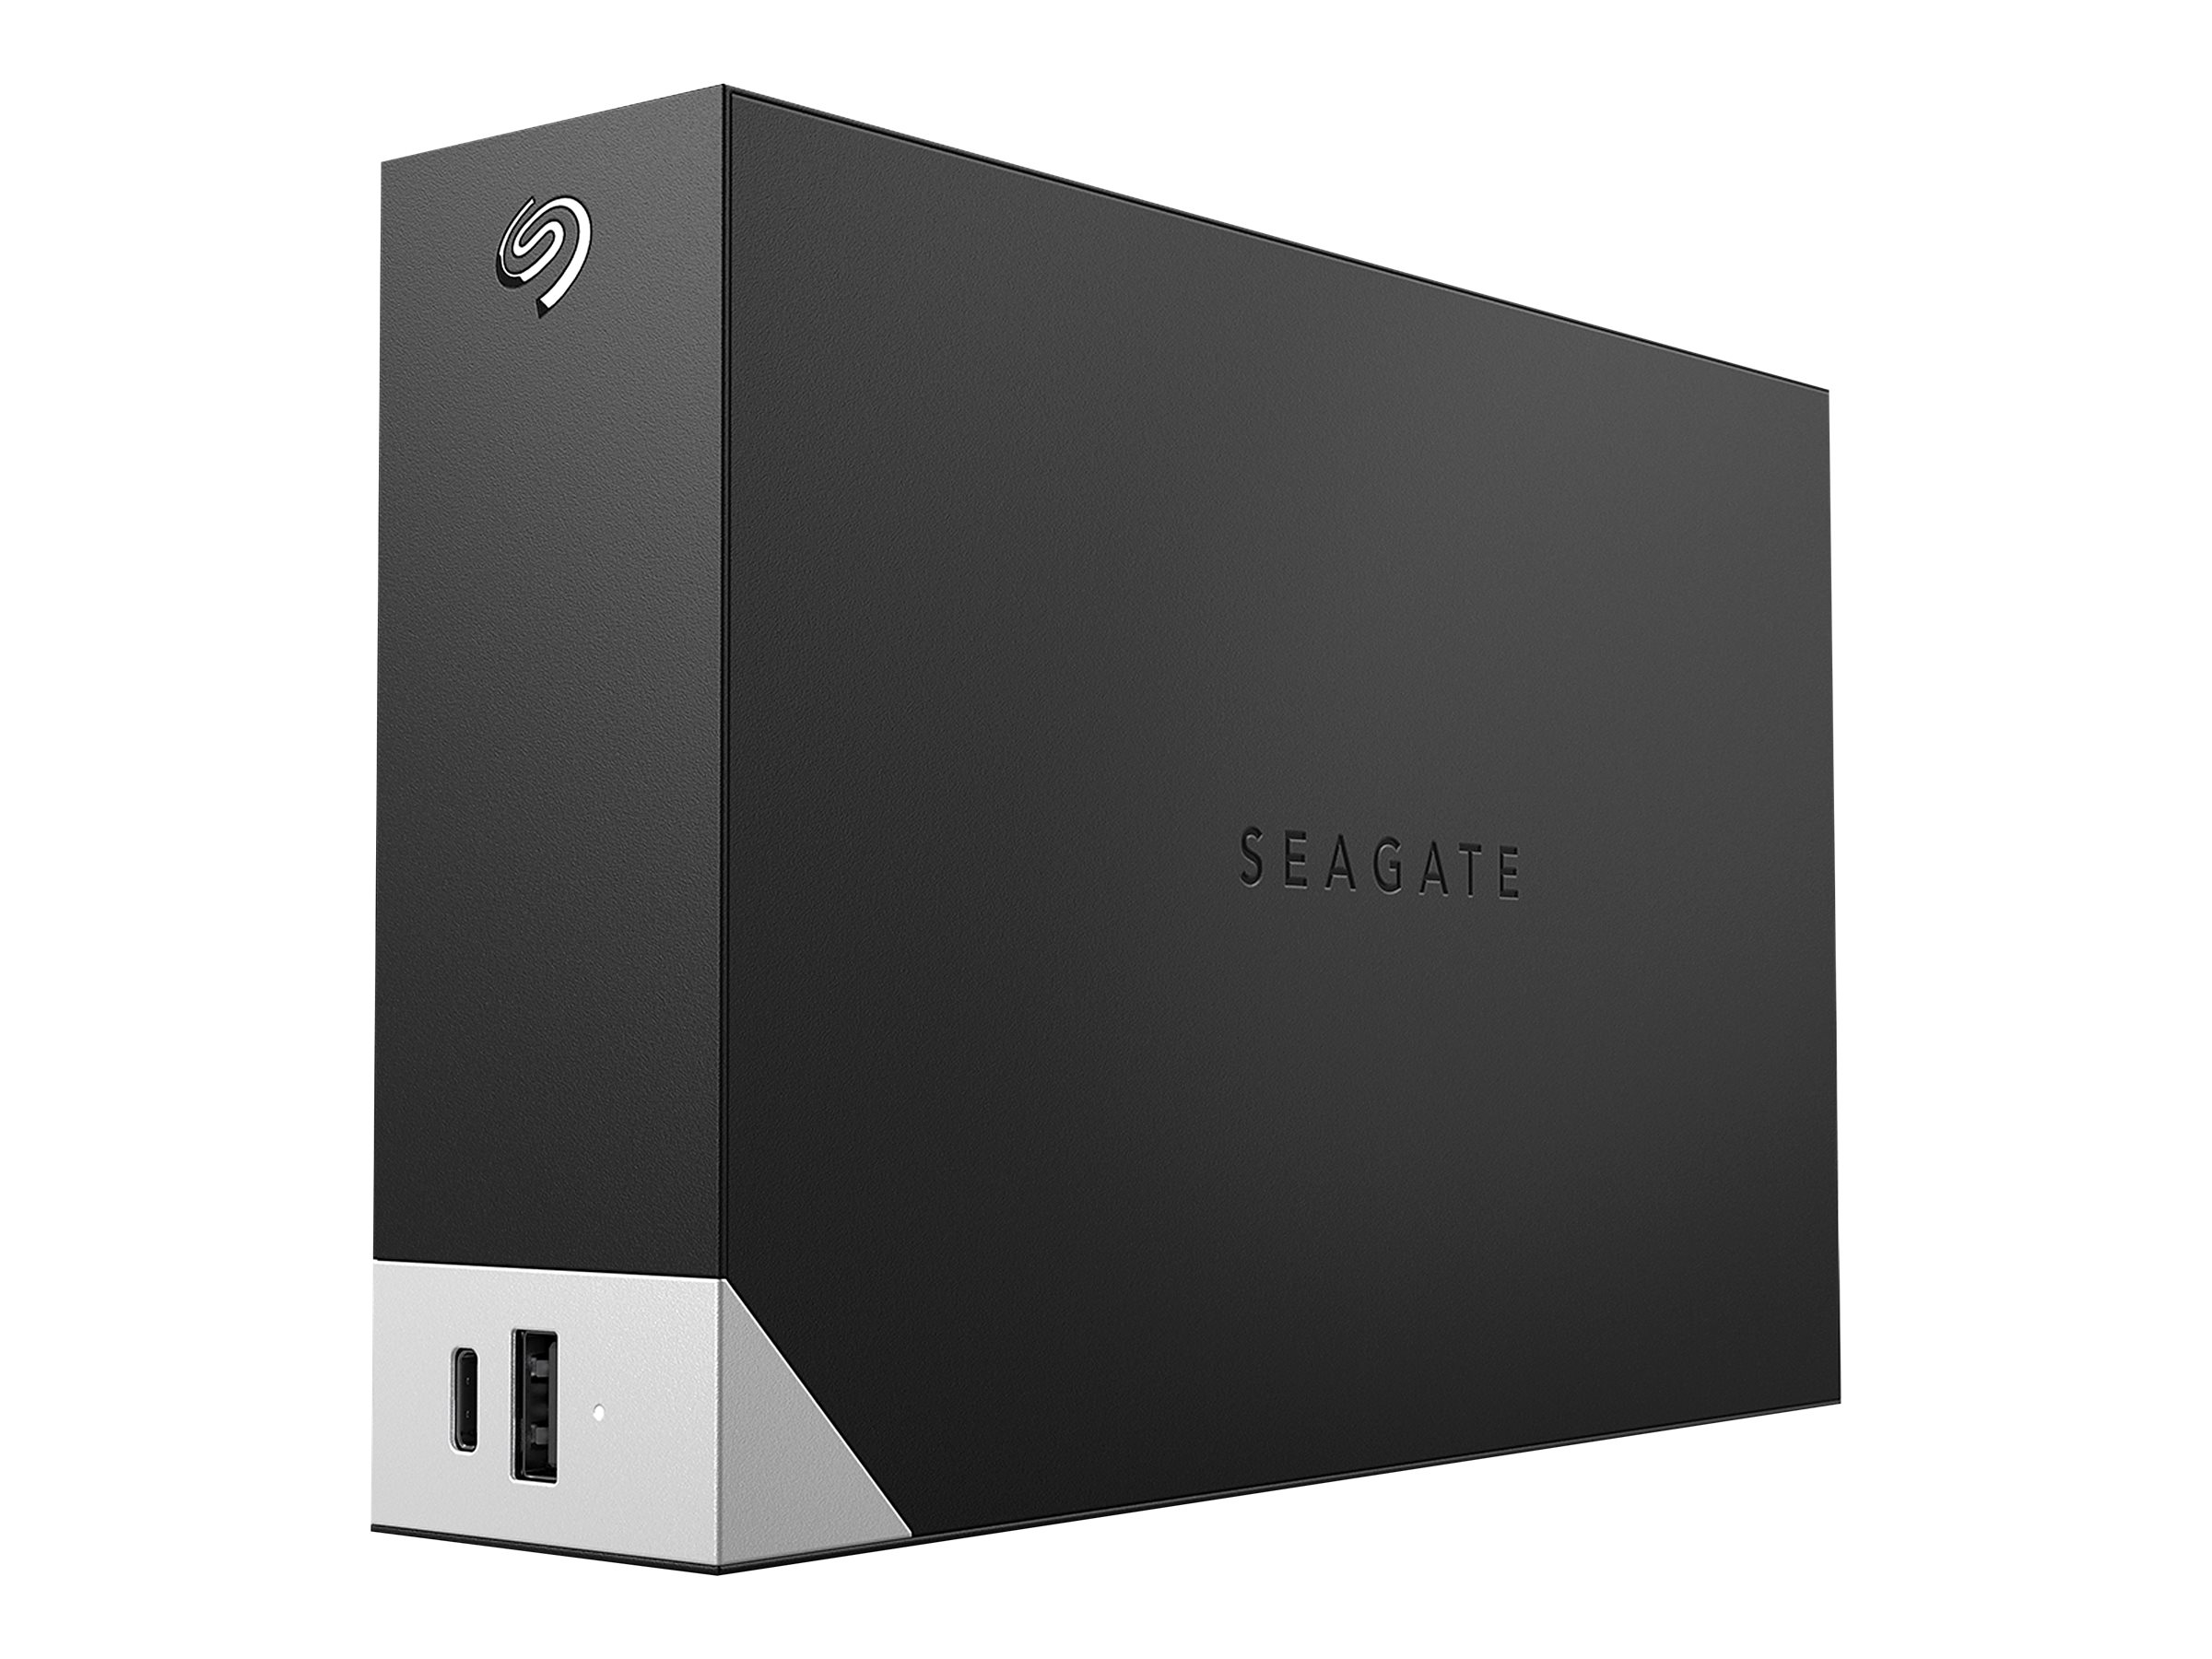 Seagate One Touch with hub STLC18000400 - Festplatte - 18 TB - extern (Stationär) - USB 3.0 - Schwarz